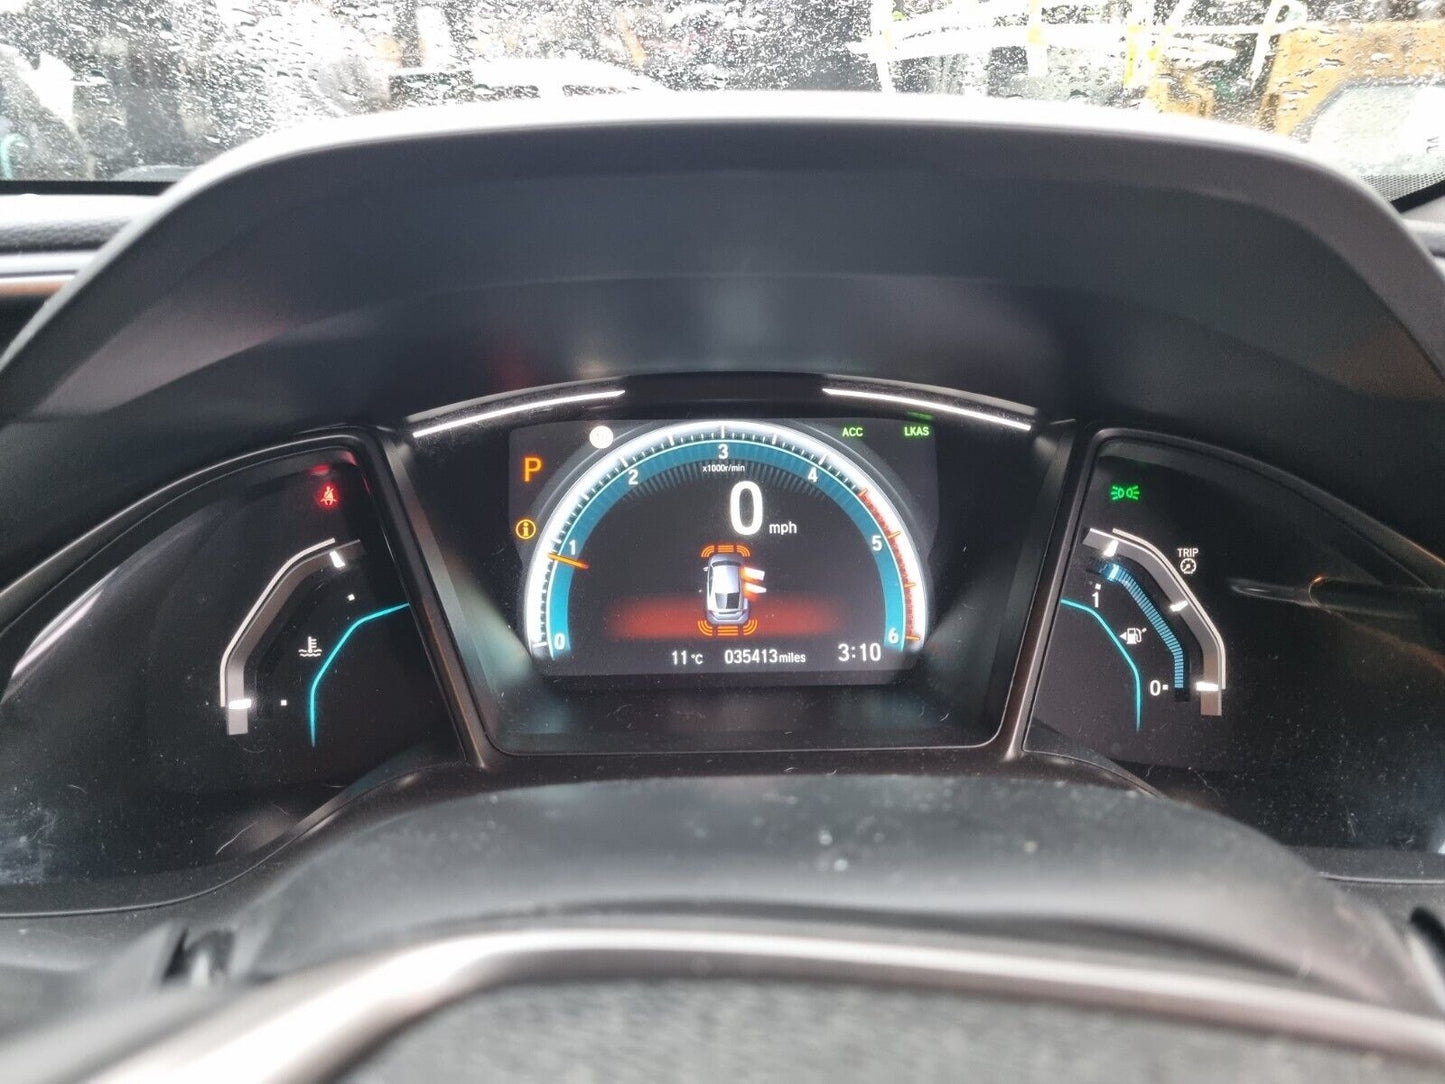 2019 HONDA CIVIC SR MK10 FK9 1.6 I-DTEC DIESEL 6 SPEED AUTO VEHICLE FOR BREAKING